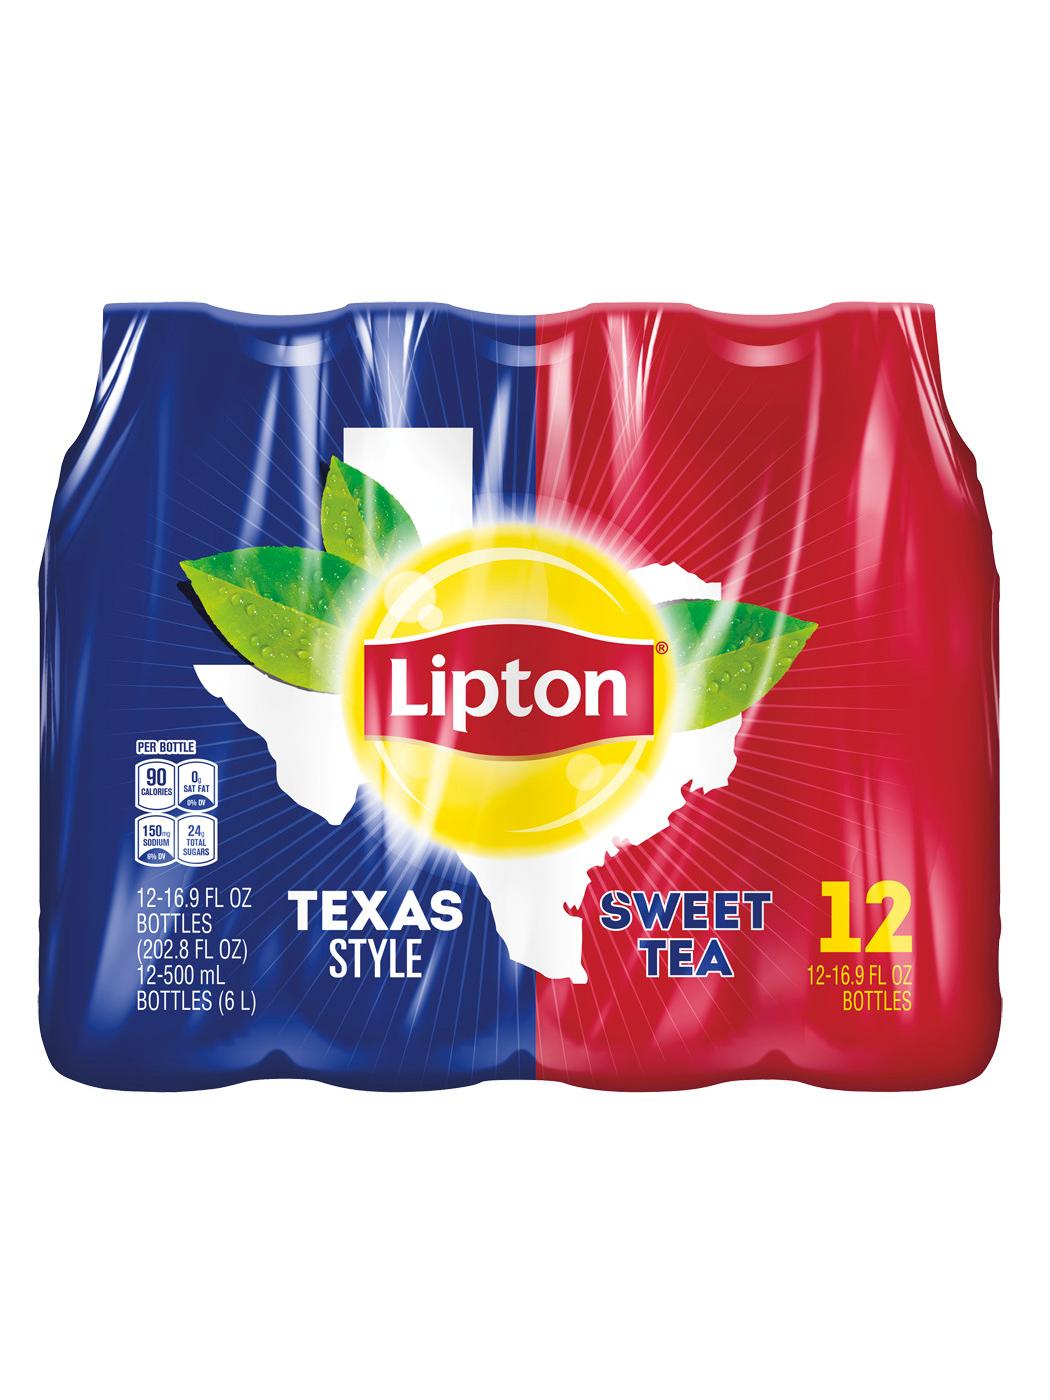 Lipton Texas Style Sweet Tea 16.9 oz Bottles; image 1 of 3